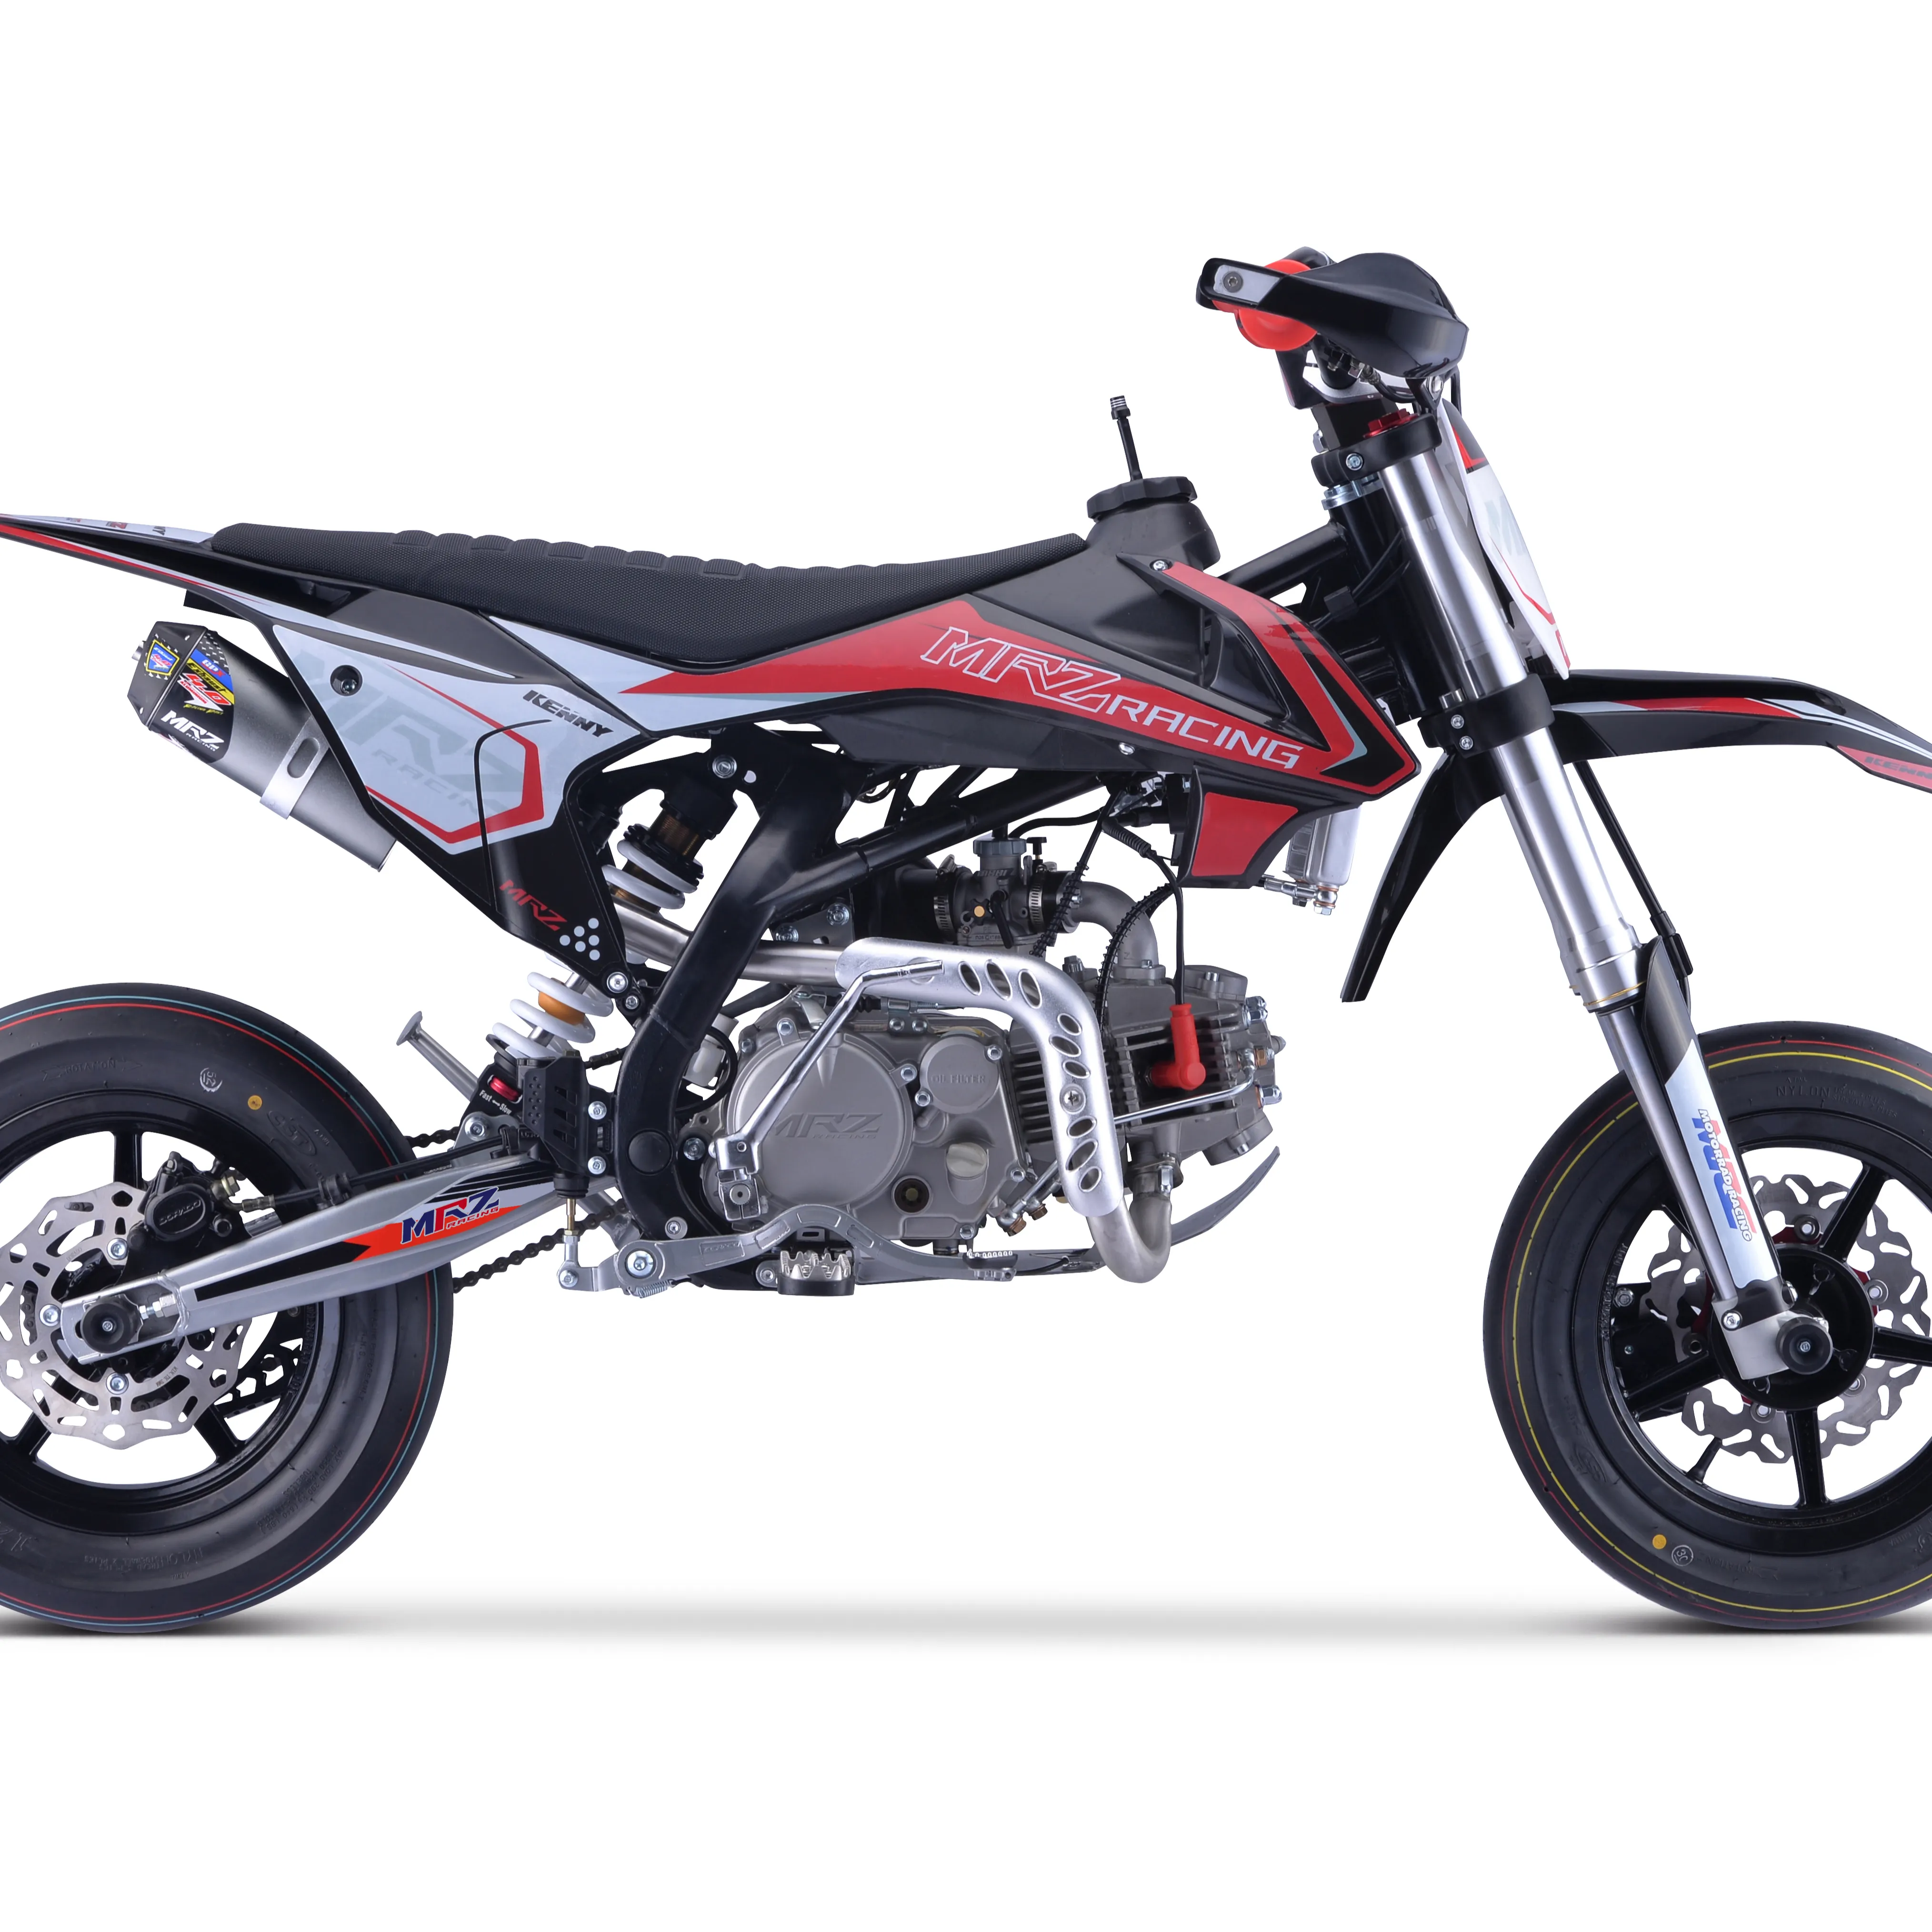 MRZ RACING DT 160 MOTARD NEU Super motard 140cc 160cc Ölkühler Pit Bike Motard Pitbike Motorrad ZS160 Moto Enduro Fabrica